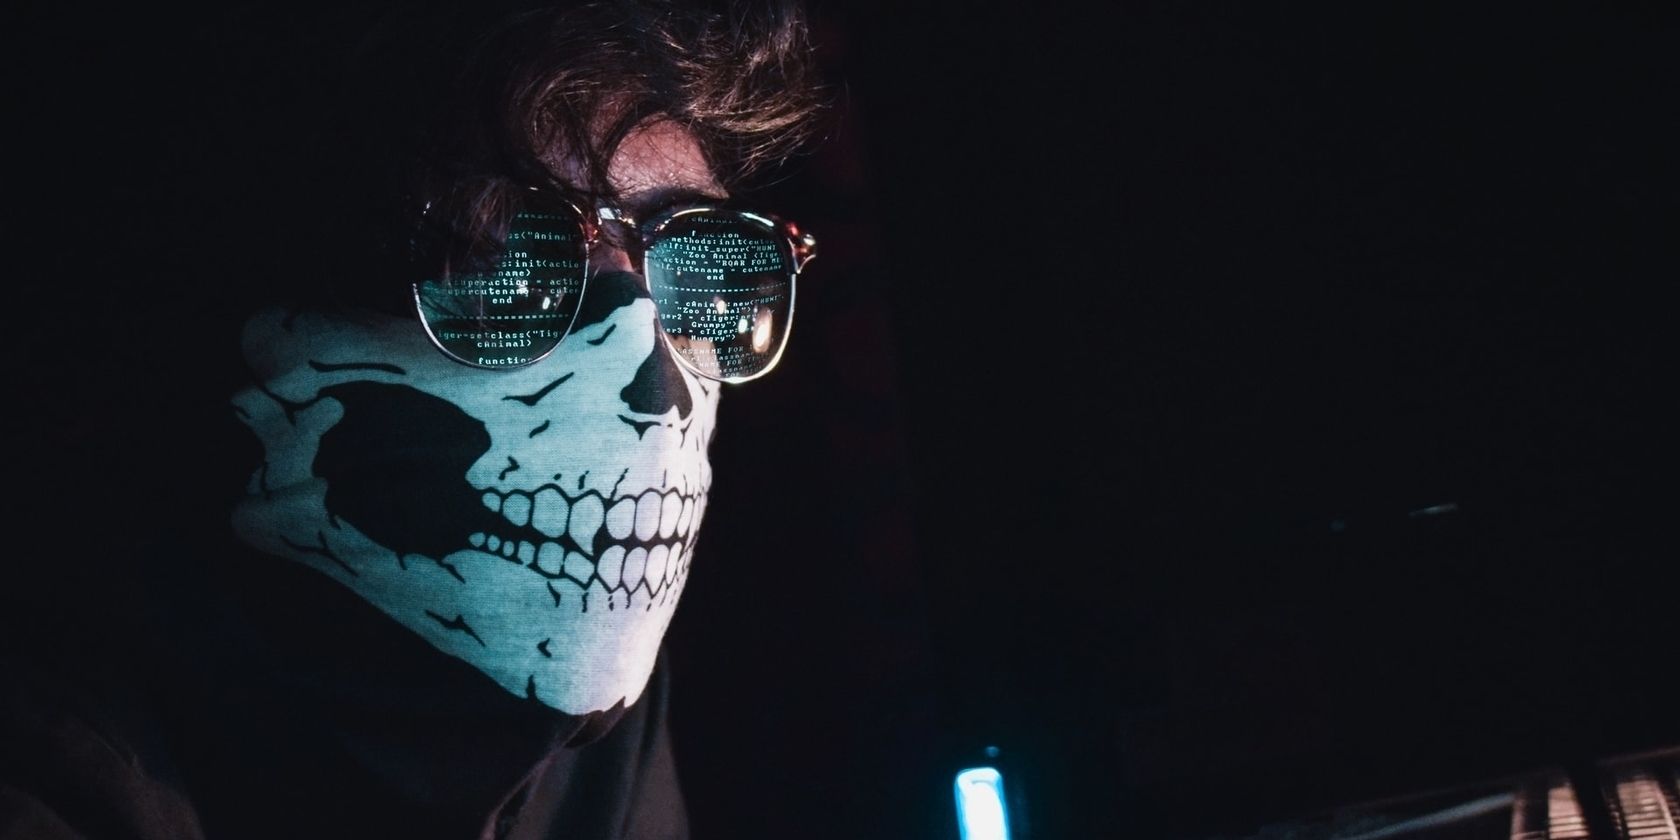 Man wearing a skull mask using a computer